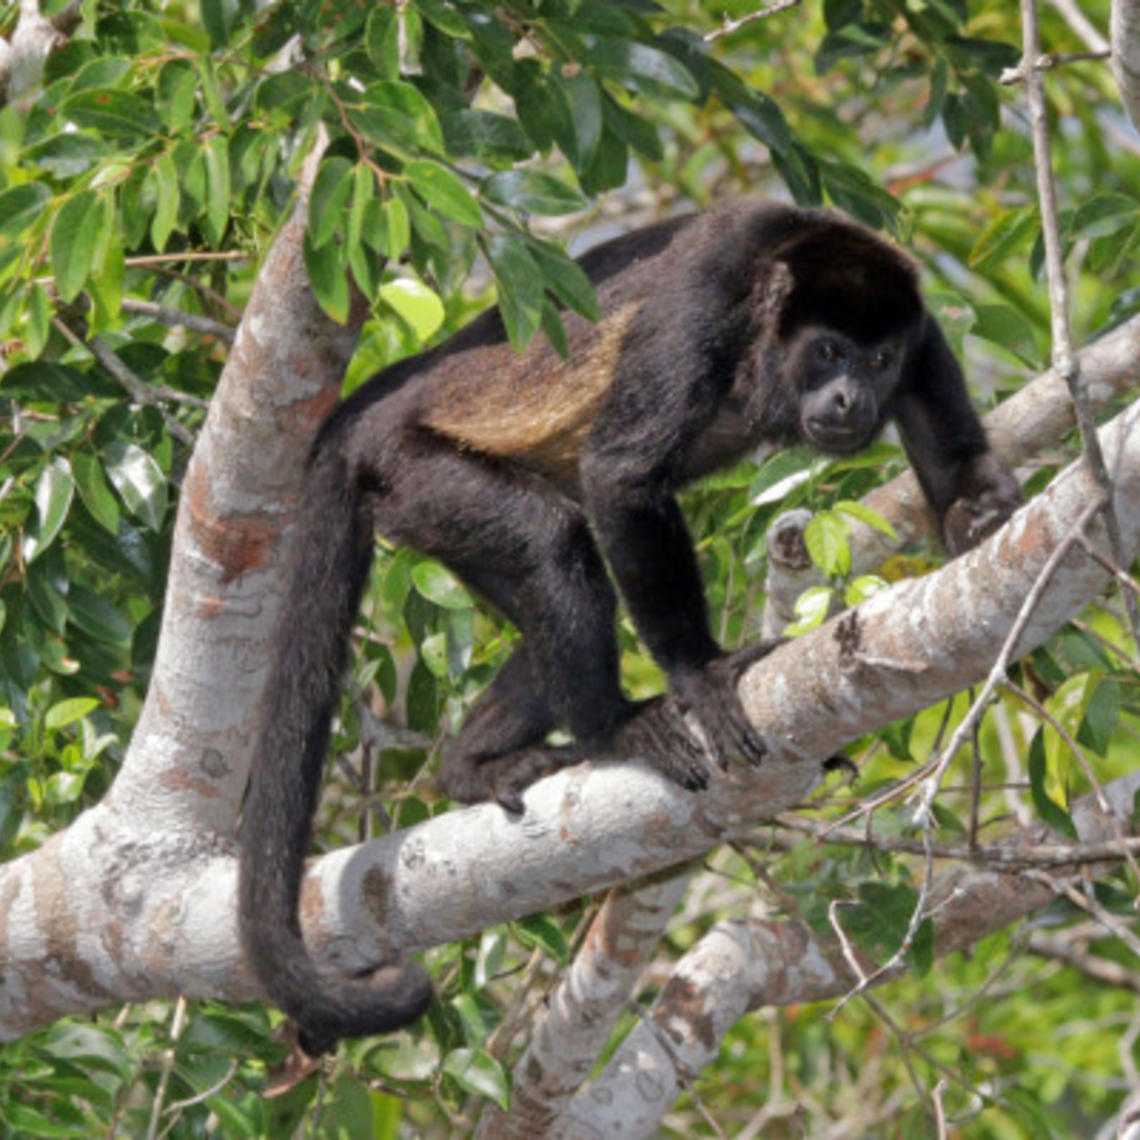 An adult Mantled Howler Monkey (Alouatta Palliata) climbing on a tree branch